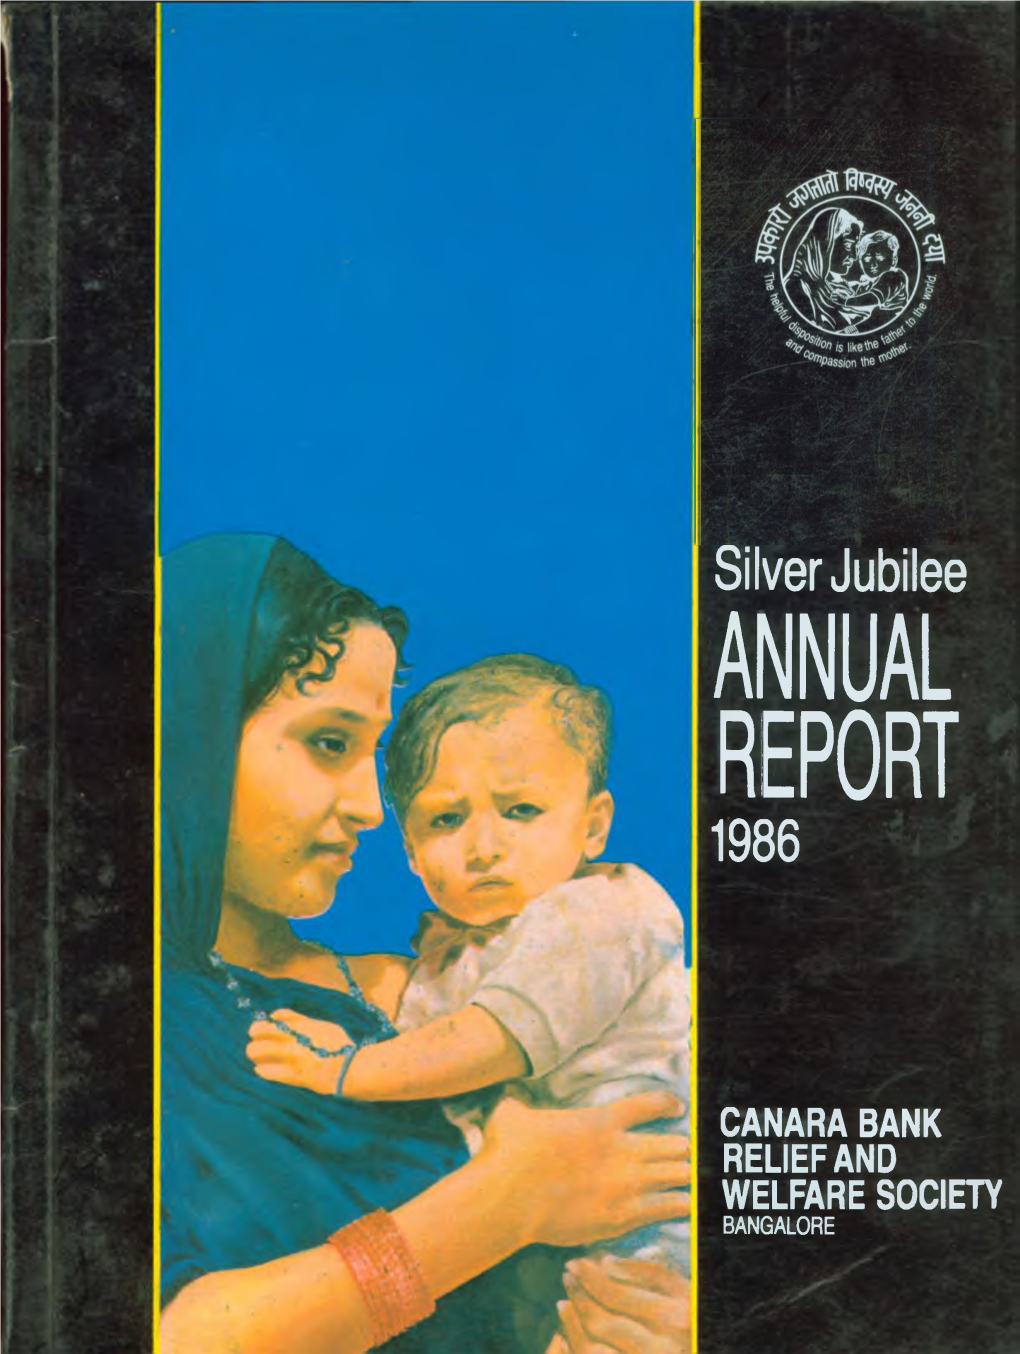 Silver Jubilee ANNUAL REPORT 1986